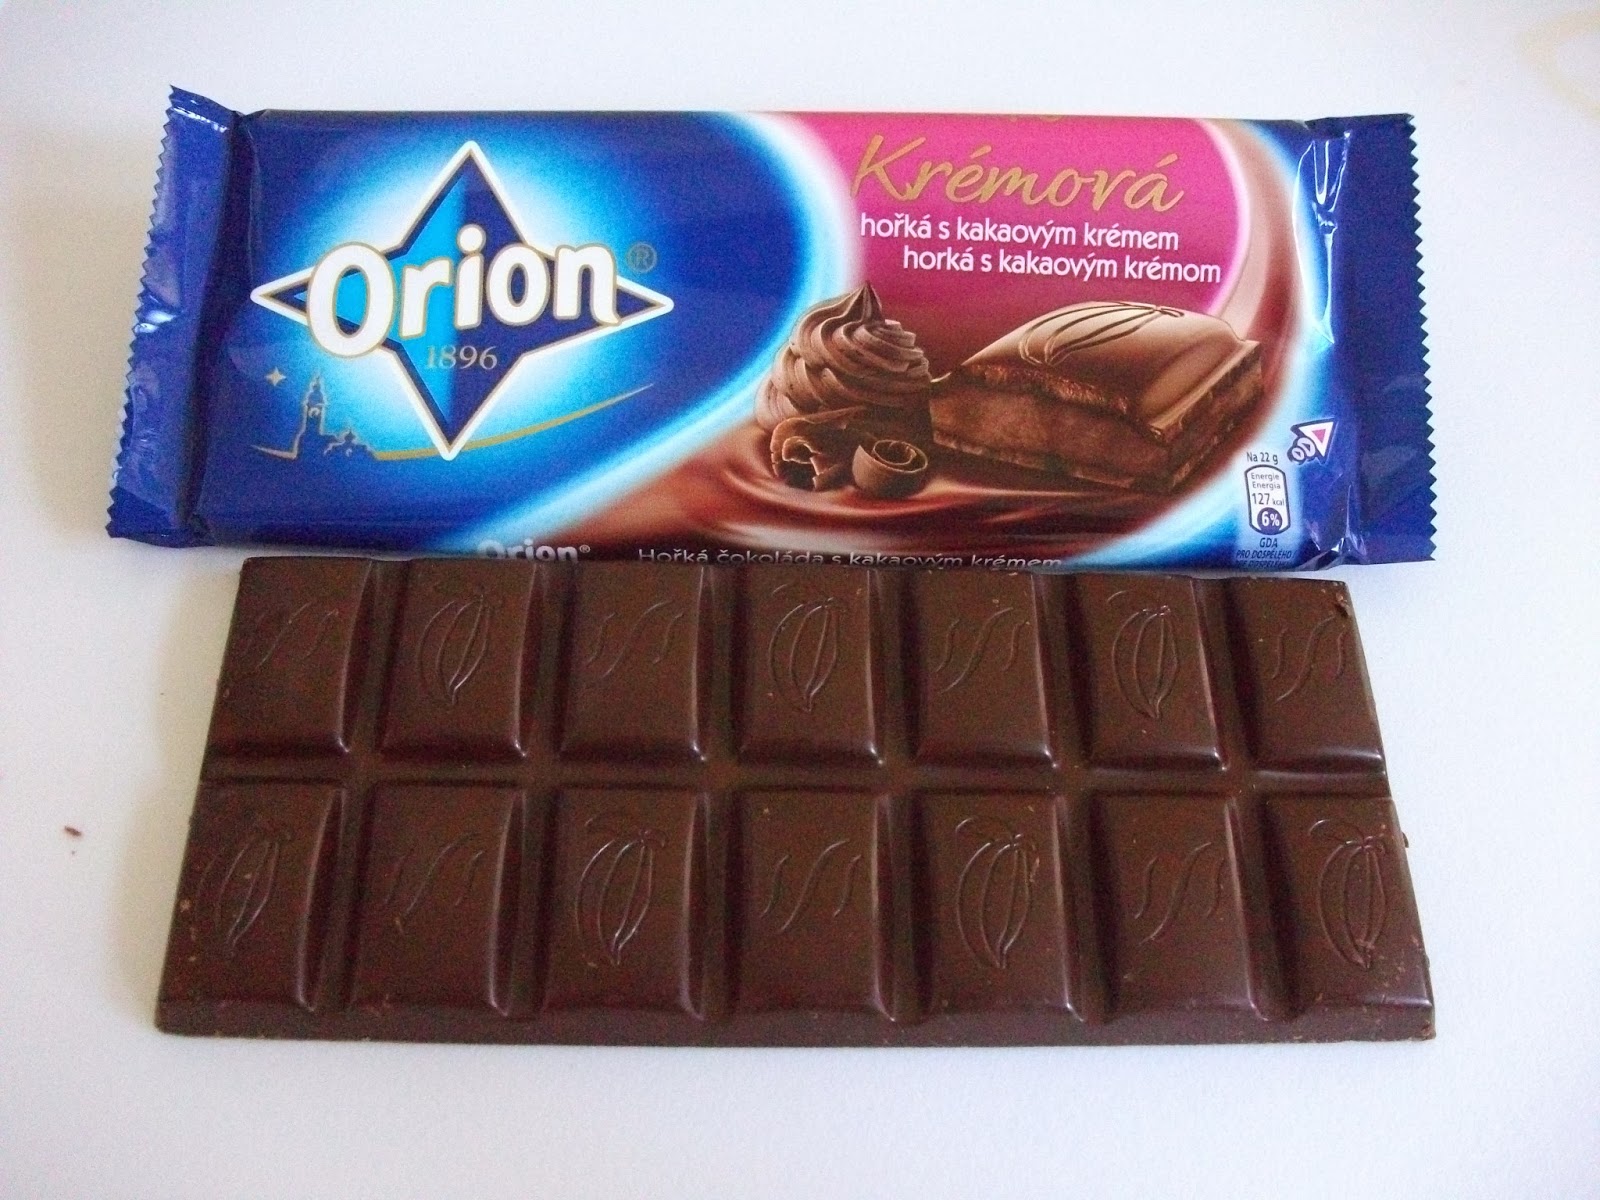 Nestlé Orion Lime Cream & Dark Chocolate Cream Krémová Bars Review